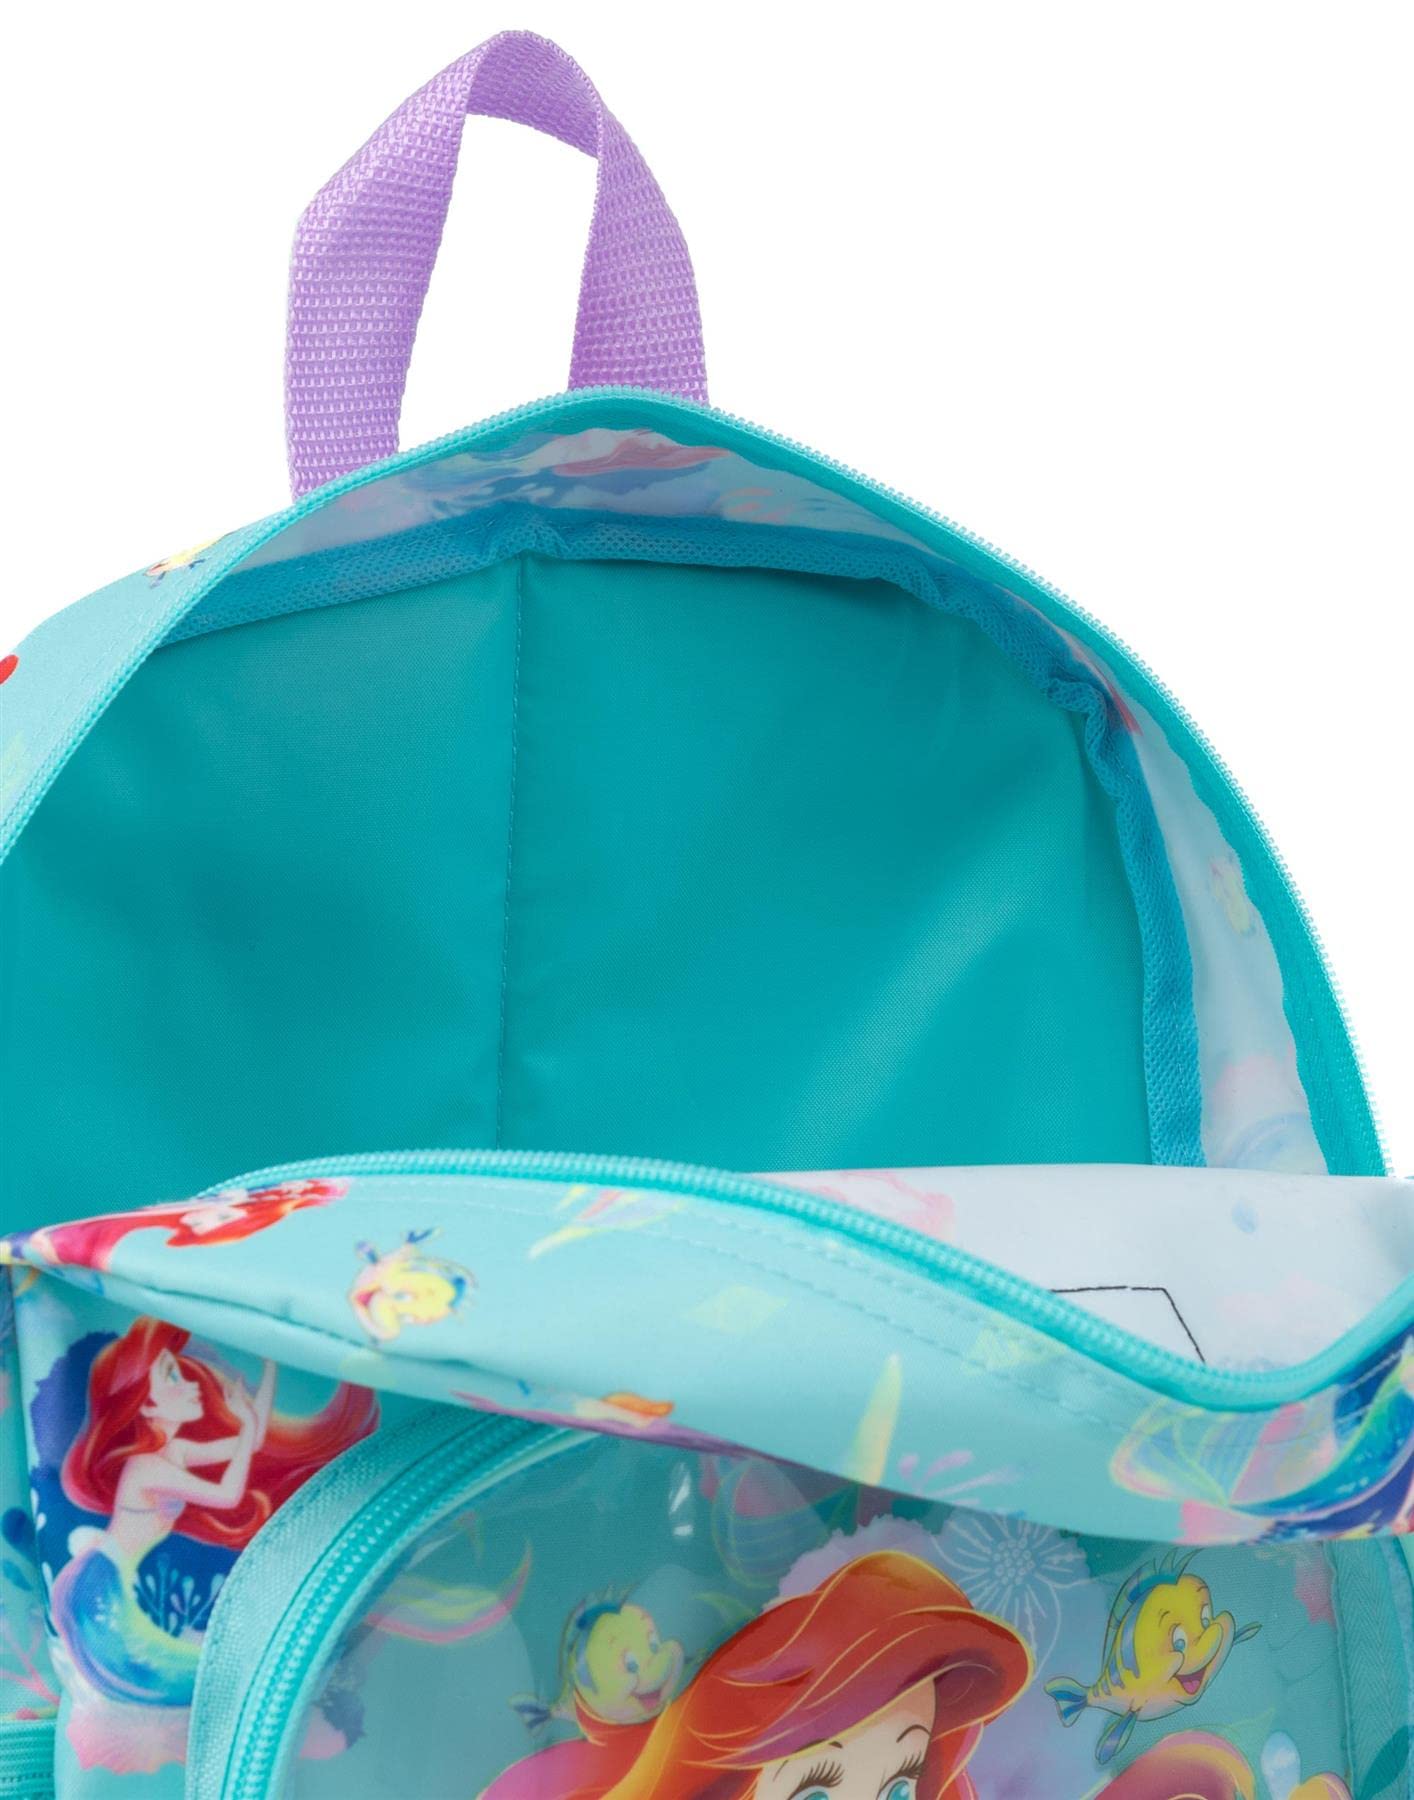 Disney The Little Mermaid Backpack Kids | Girls Ariel Sea Character Blue Rucksack | Luggage Sports School Bag Adjustable Straps | Princess Merchandise Gifts